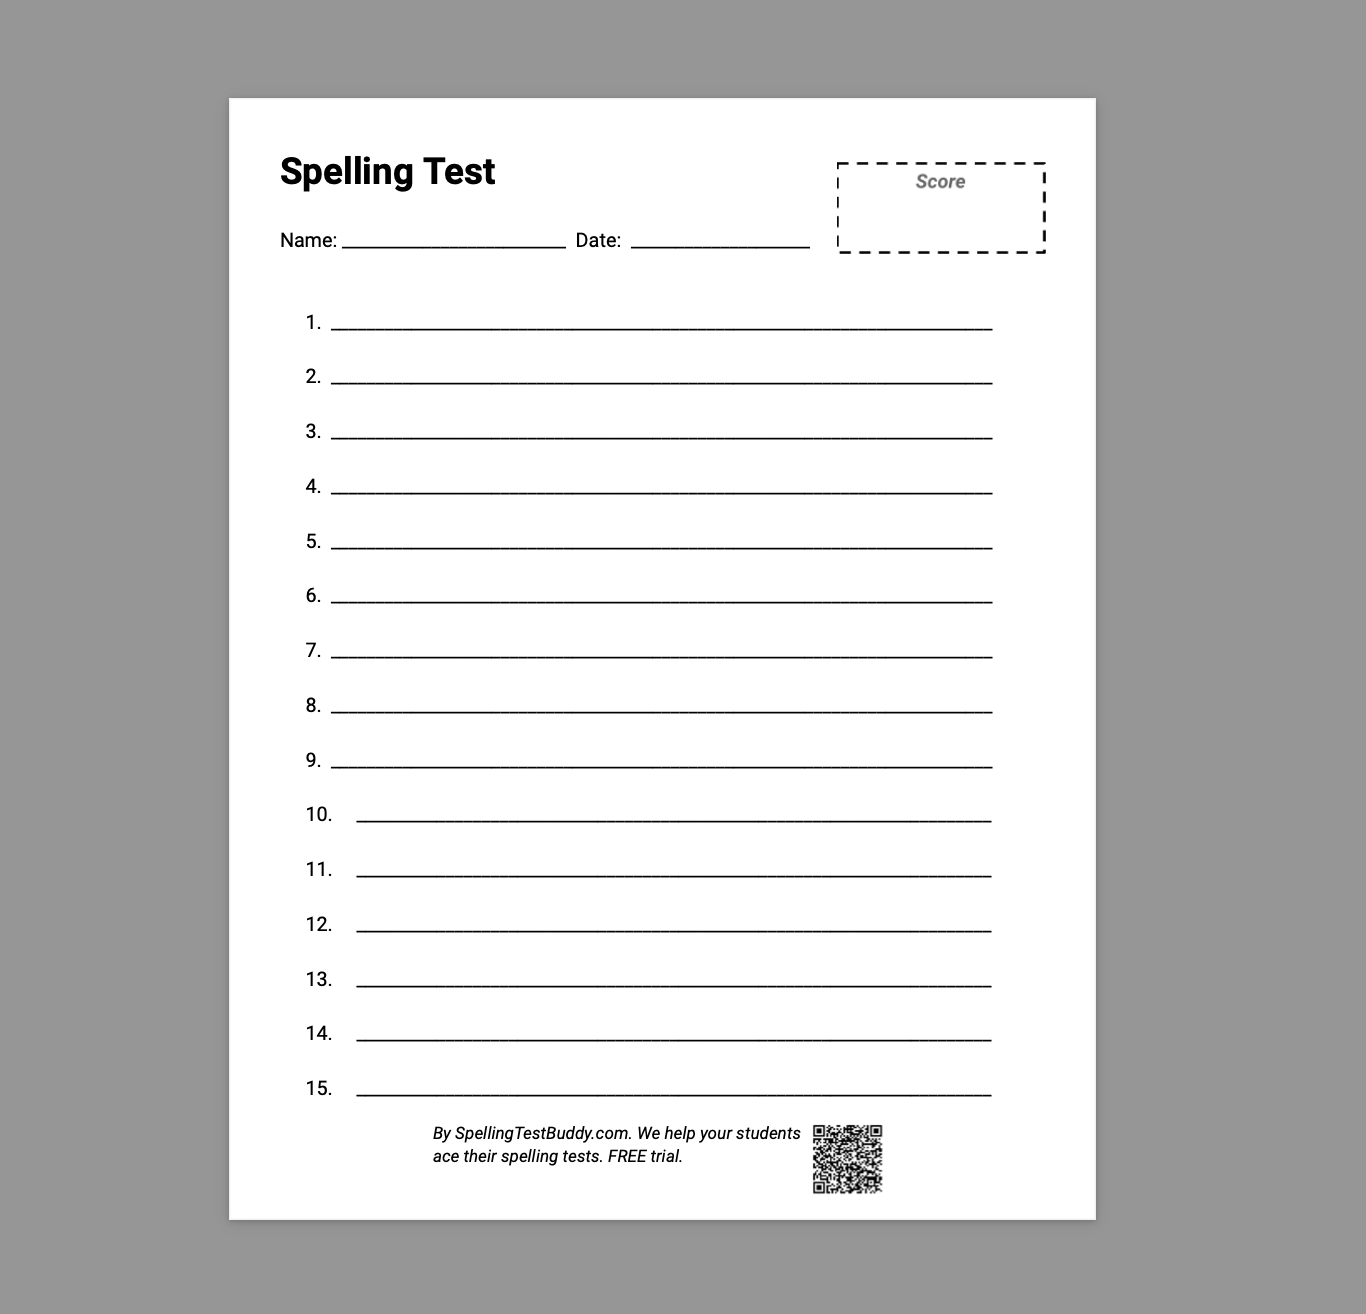 Spelling Test Paper - 15 words